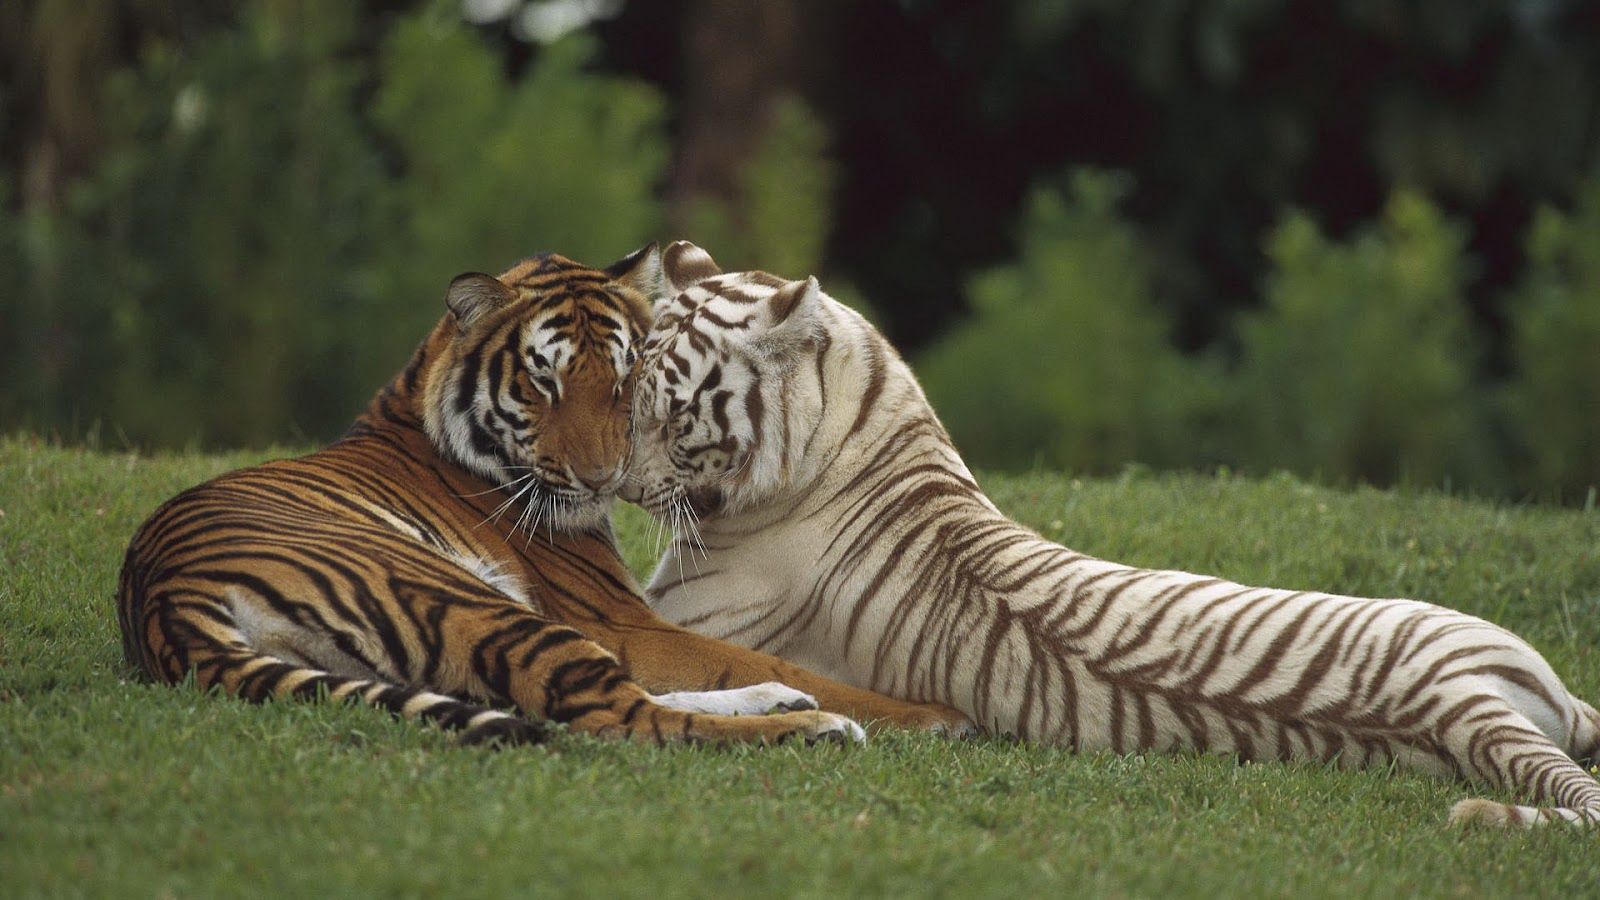 HD Tigers Wallpaper and Photo. HD Animals Wallpaper